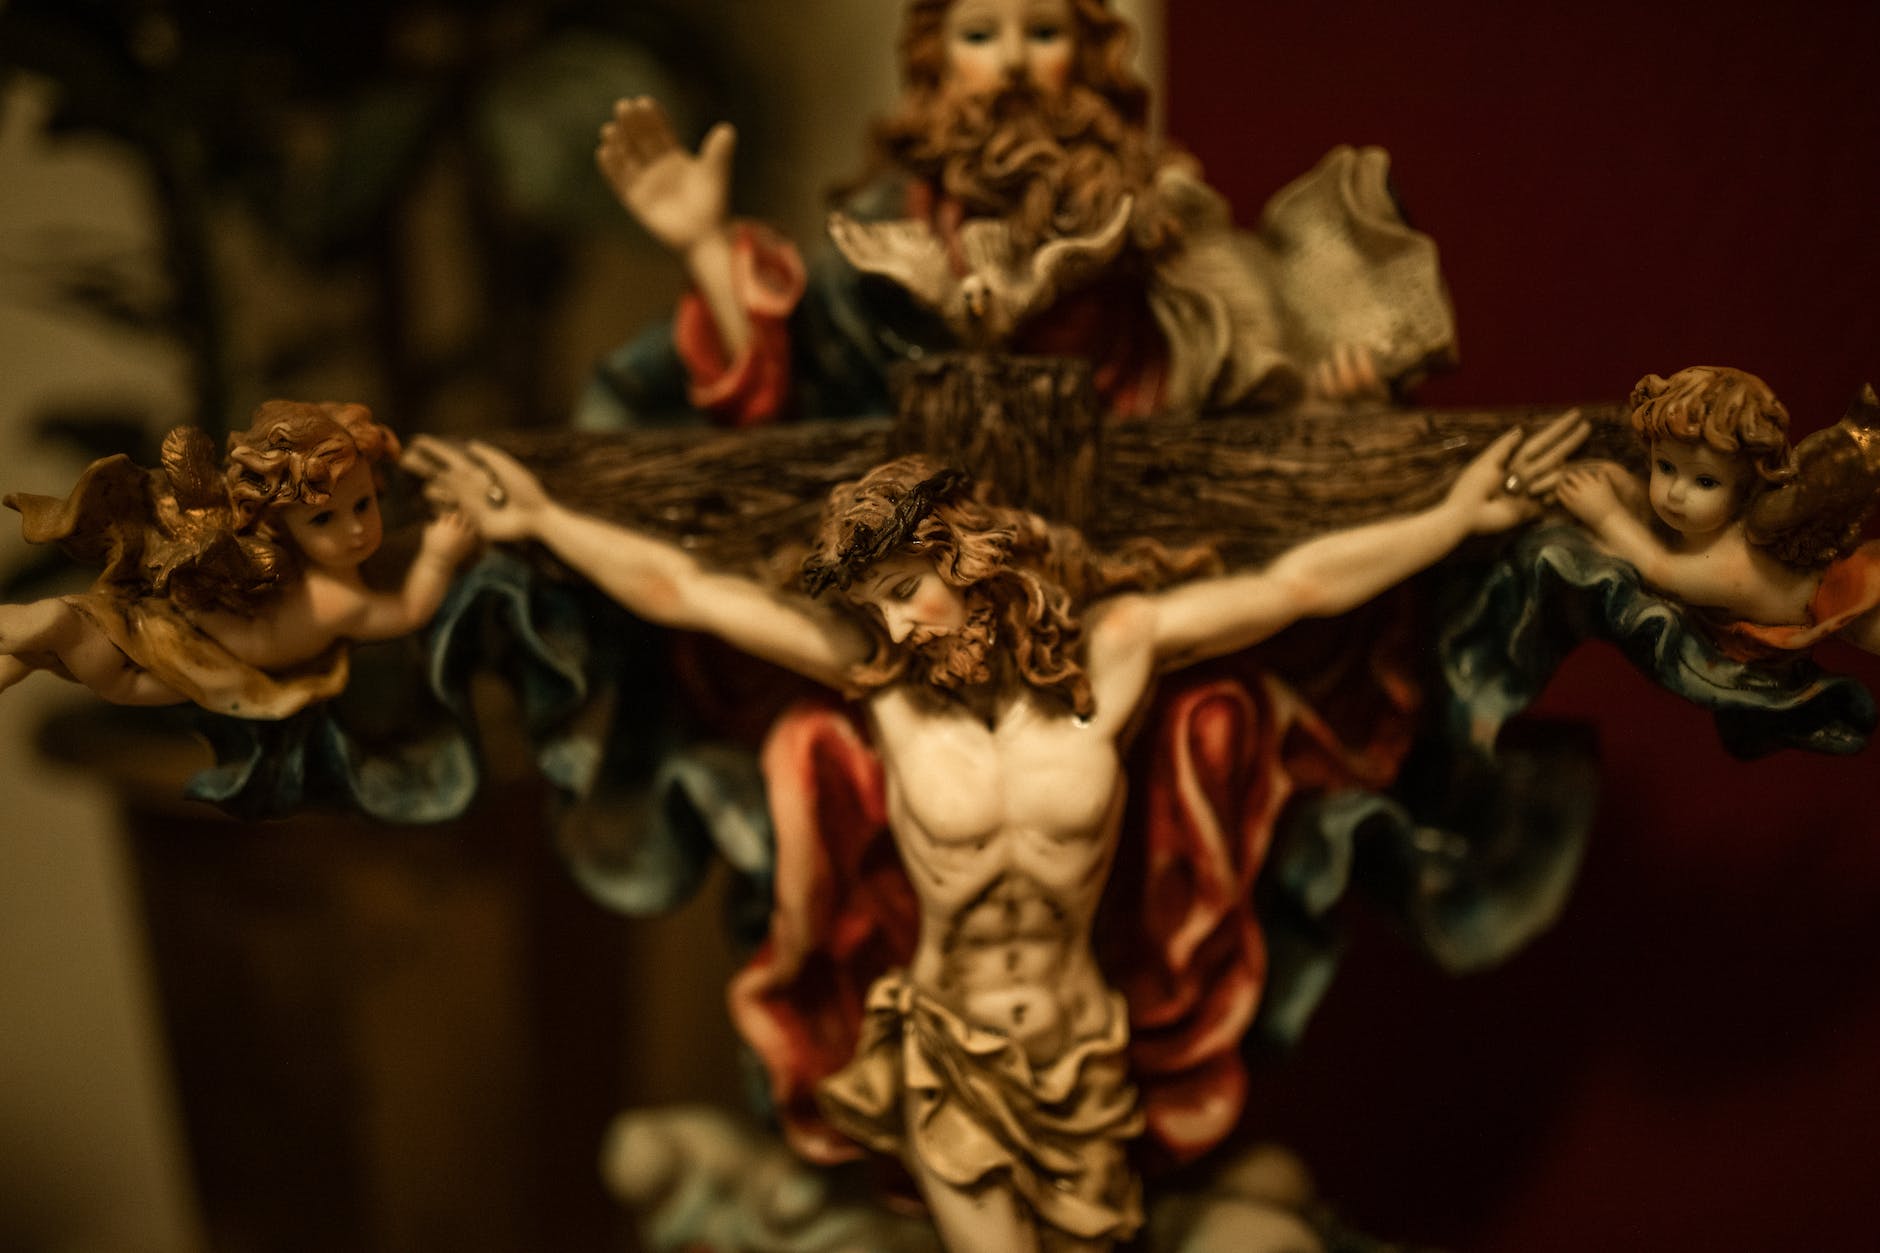 close up shot of a crucifix - The Christian focus